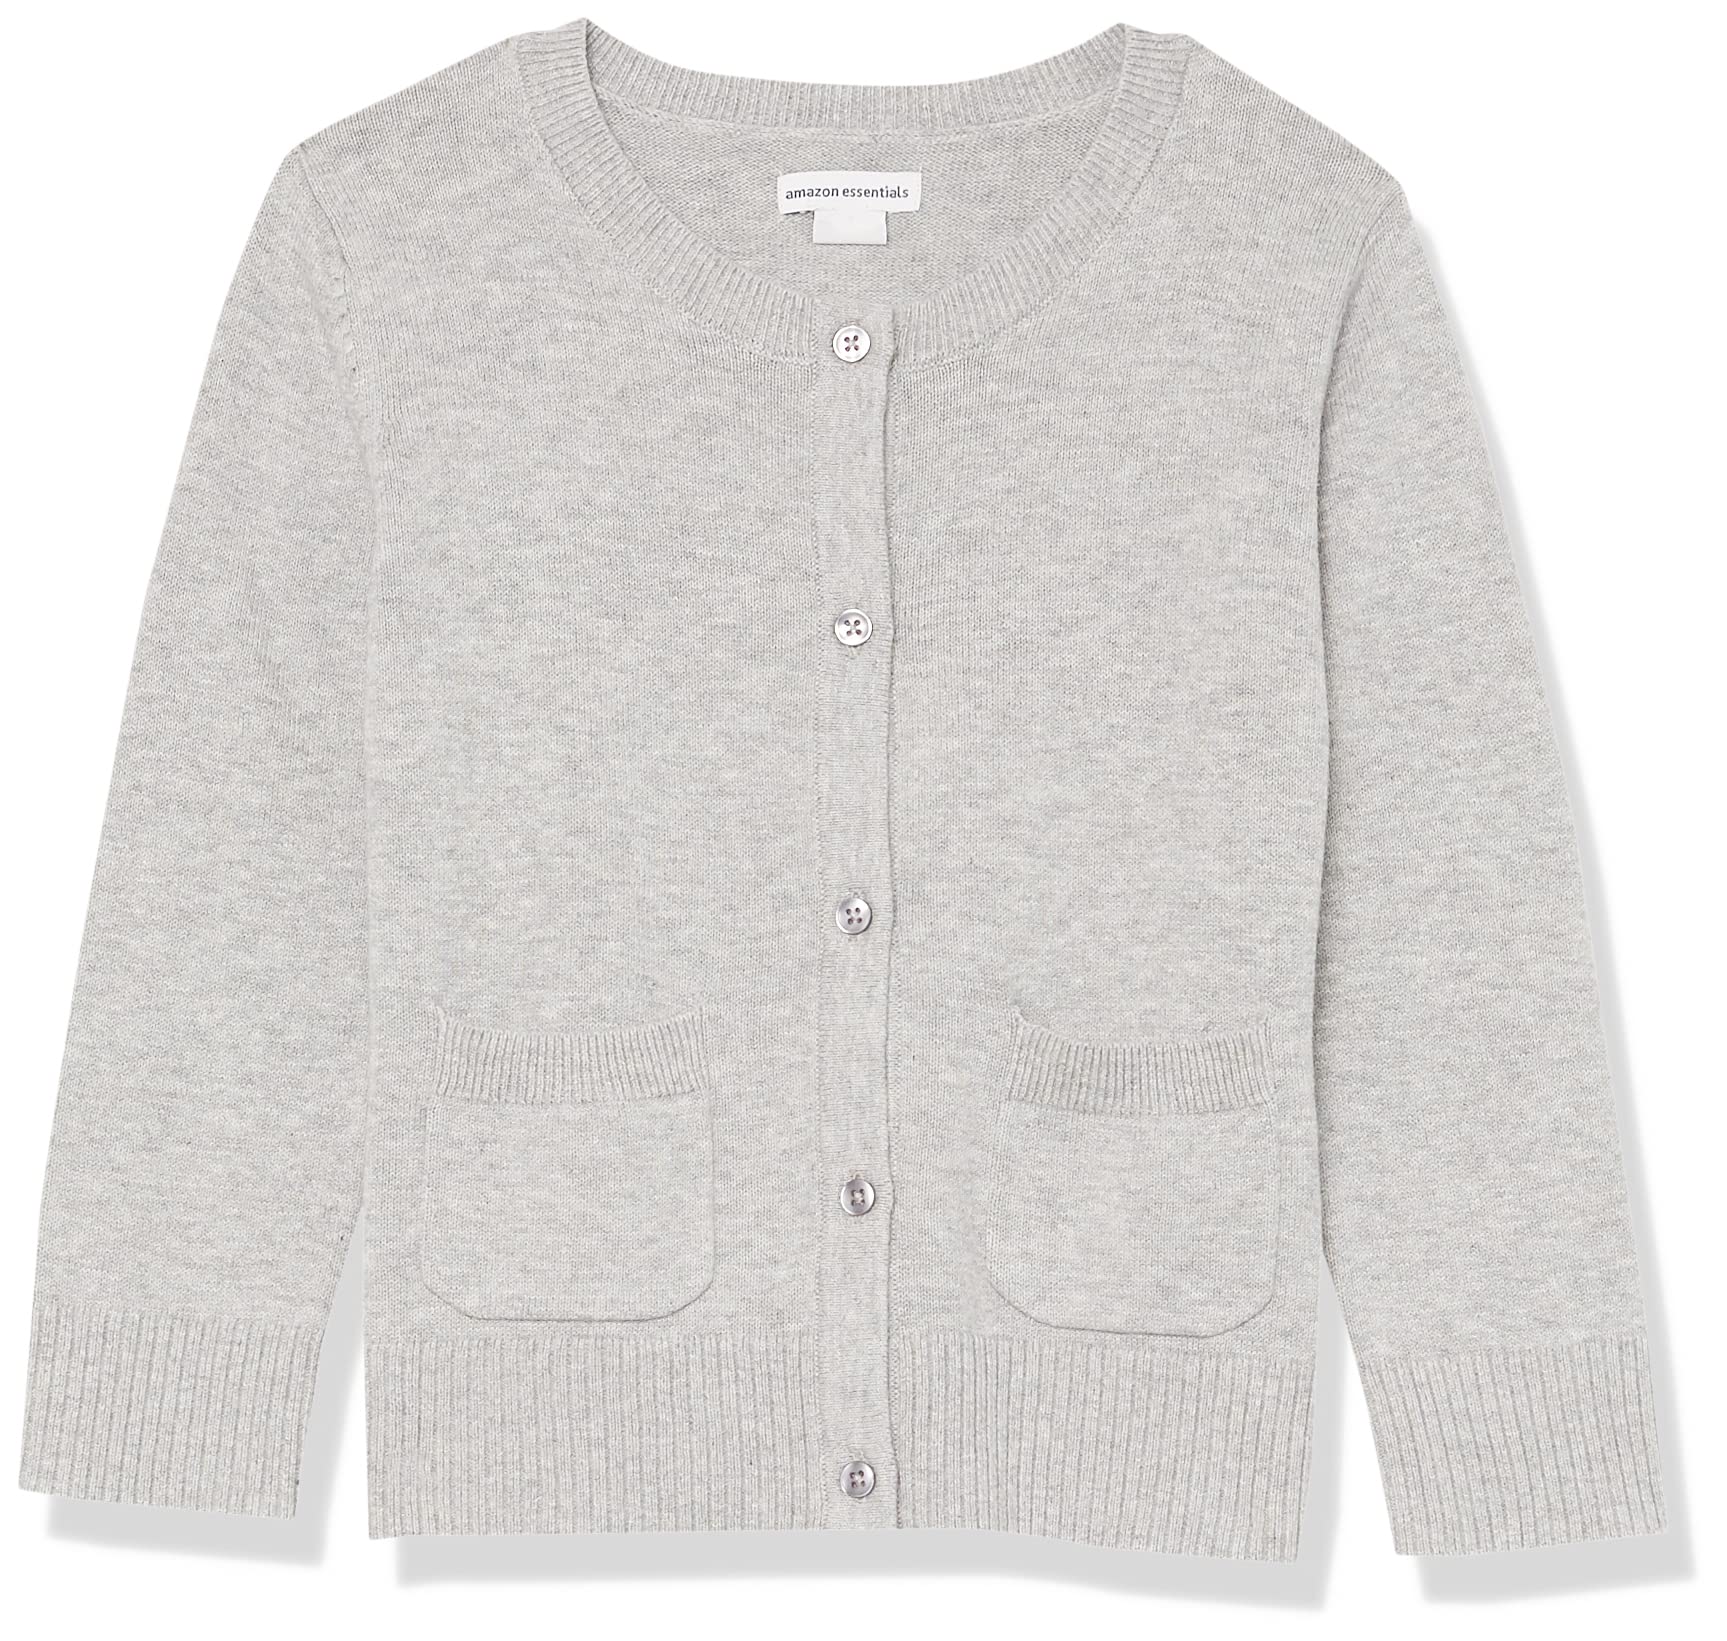 Amazon Essentials Girls and Toddlers' Uniform Slim Fit Cardigan Sweater